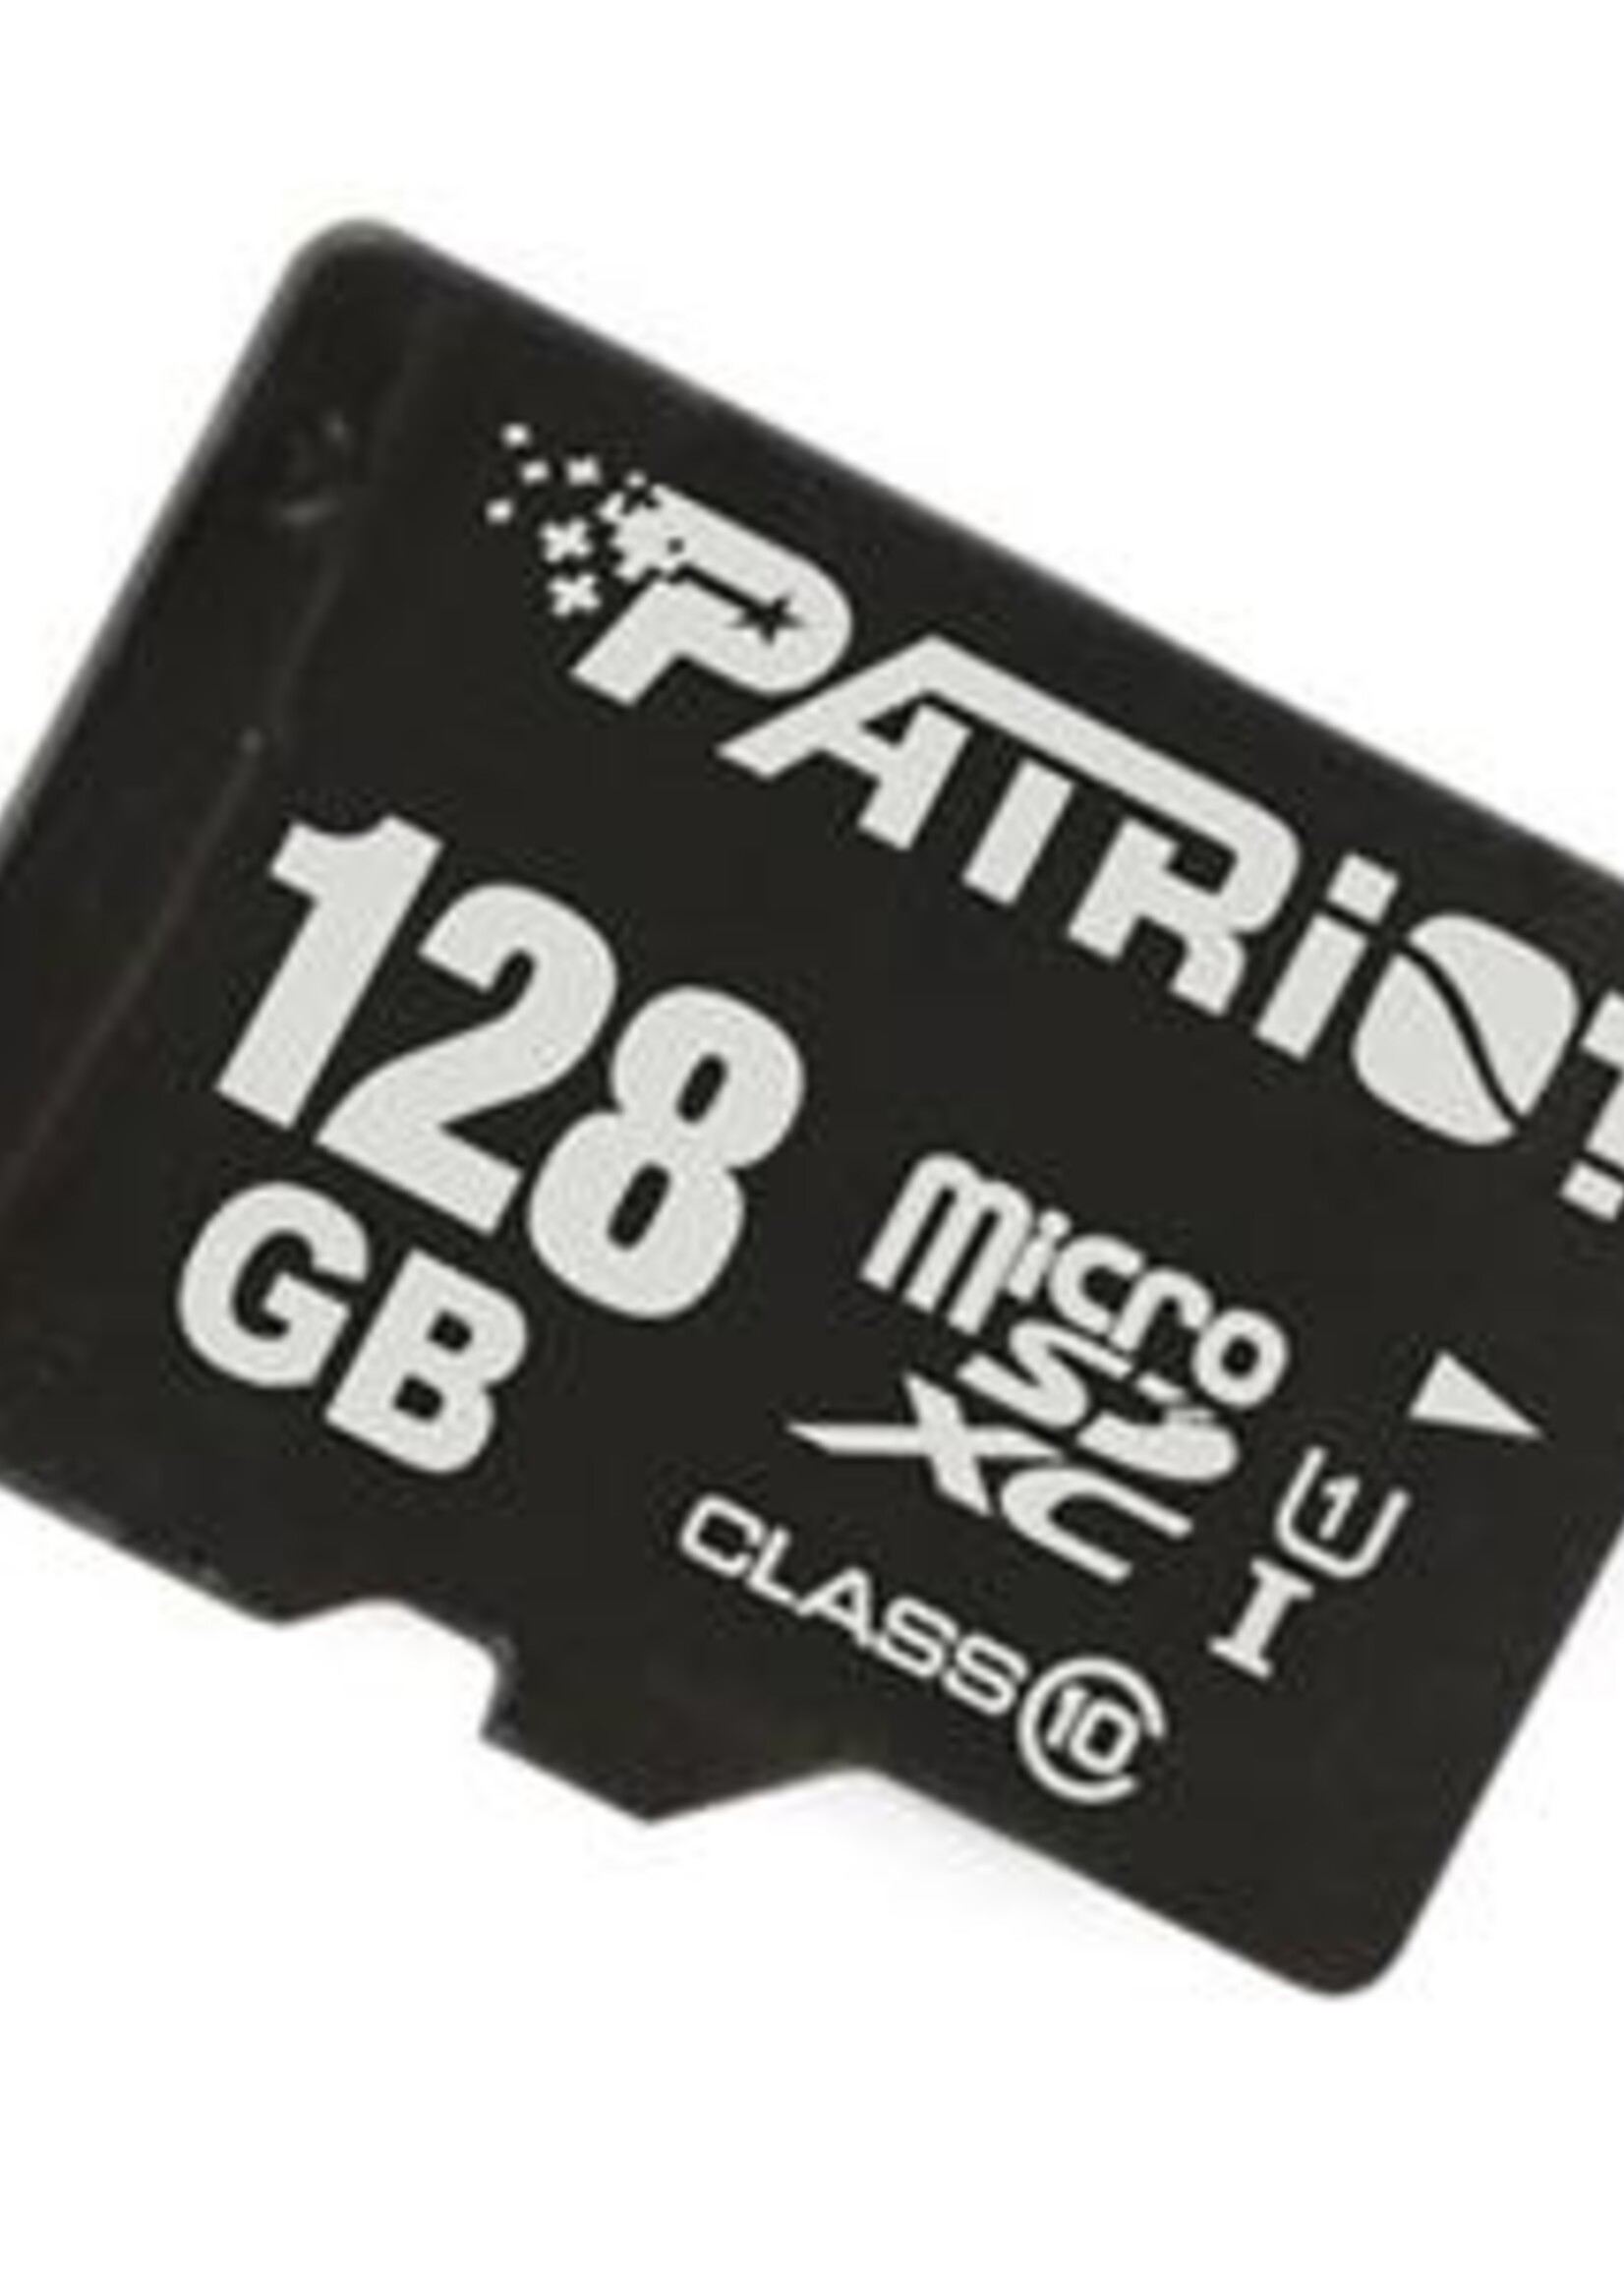 Patriot Patriot Memory 128 GB Class 10